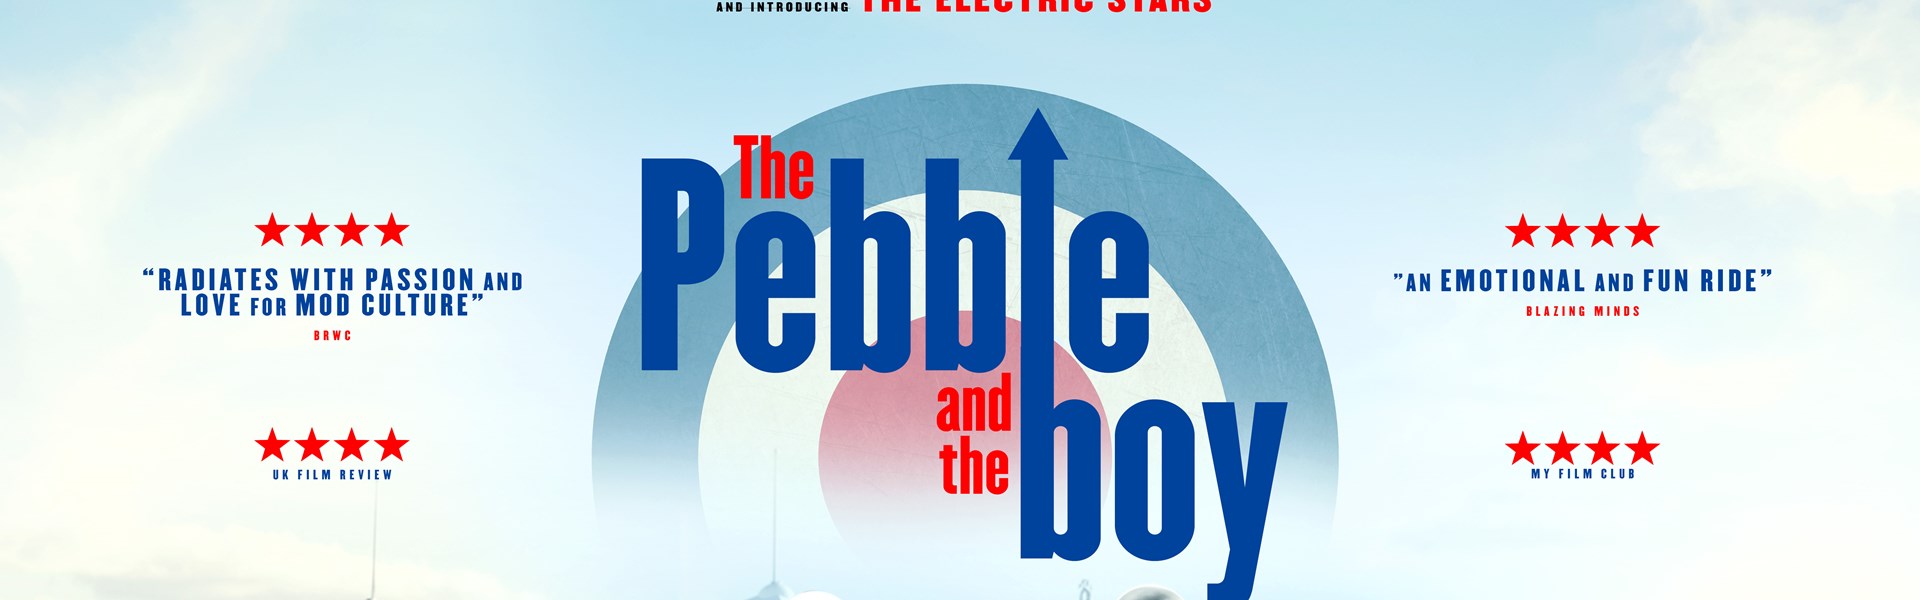 FILM: The Pebble & The Boy (15)